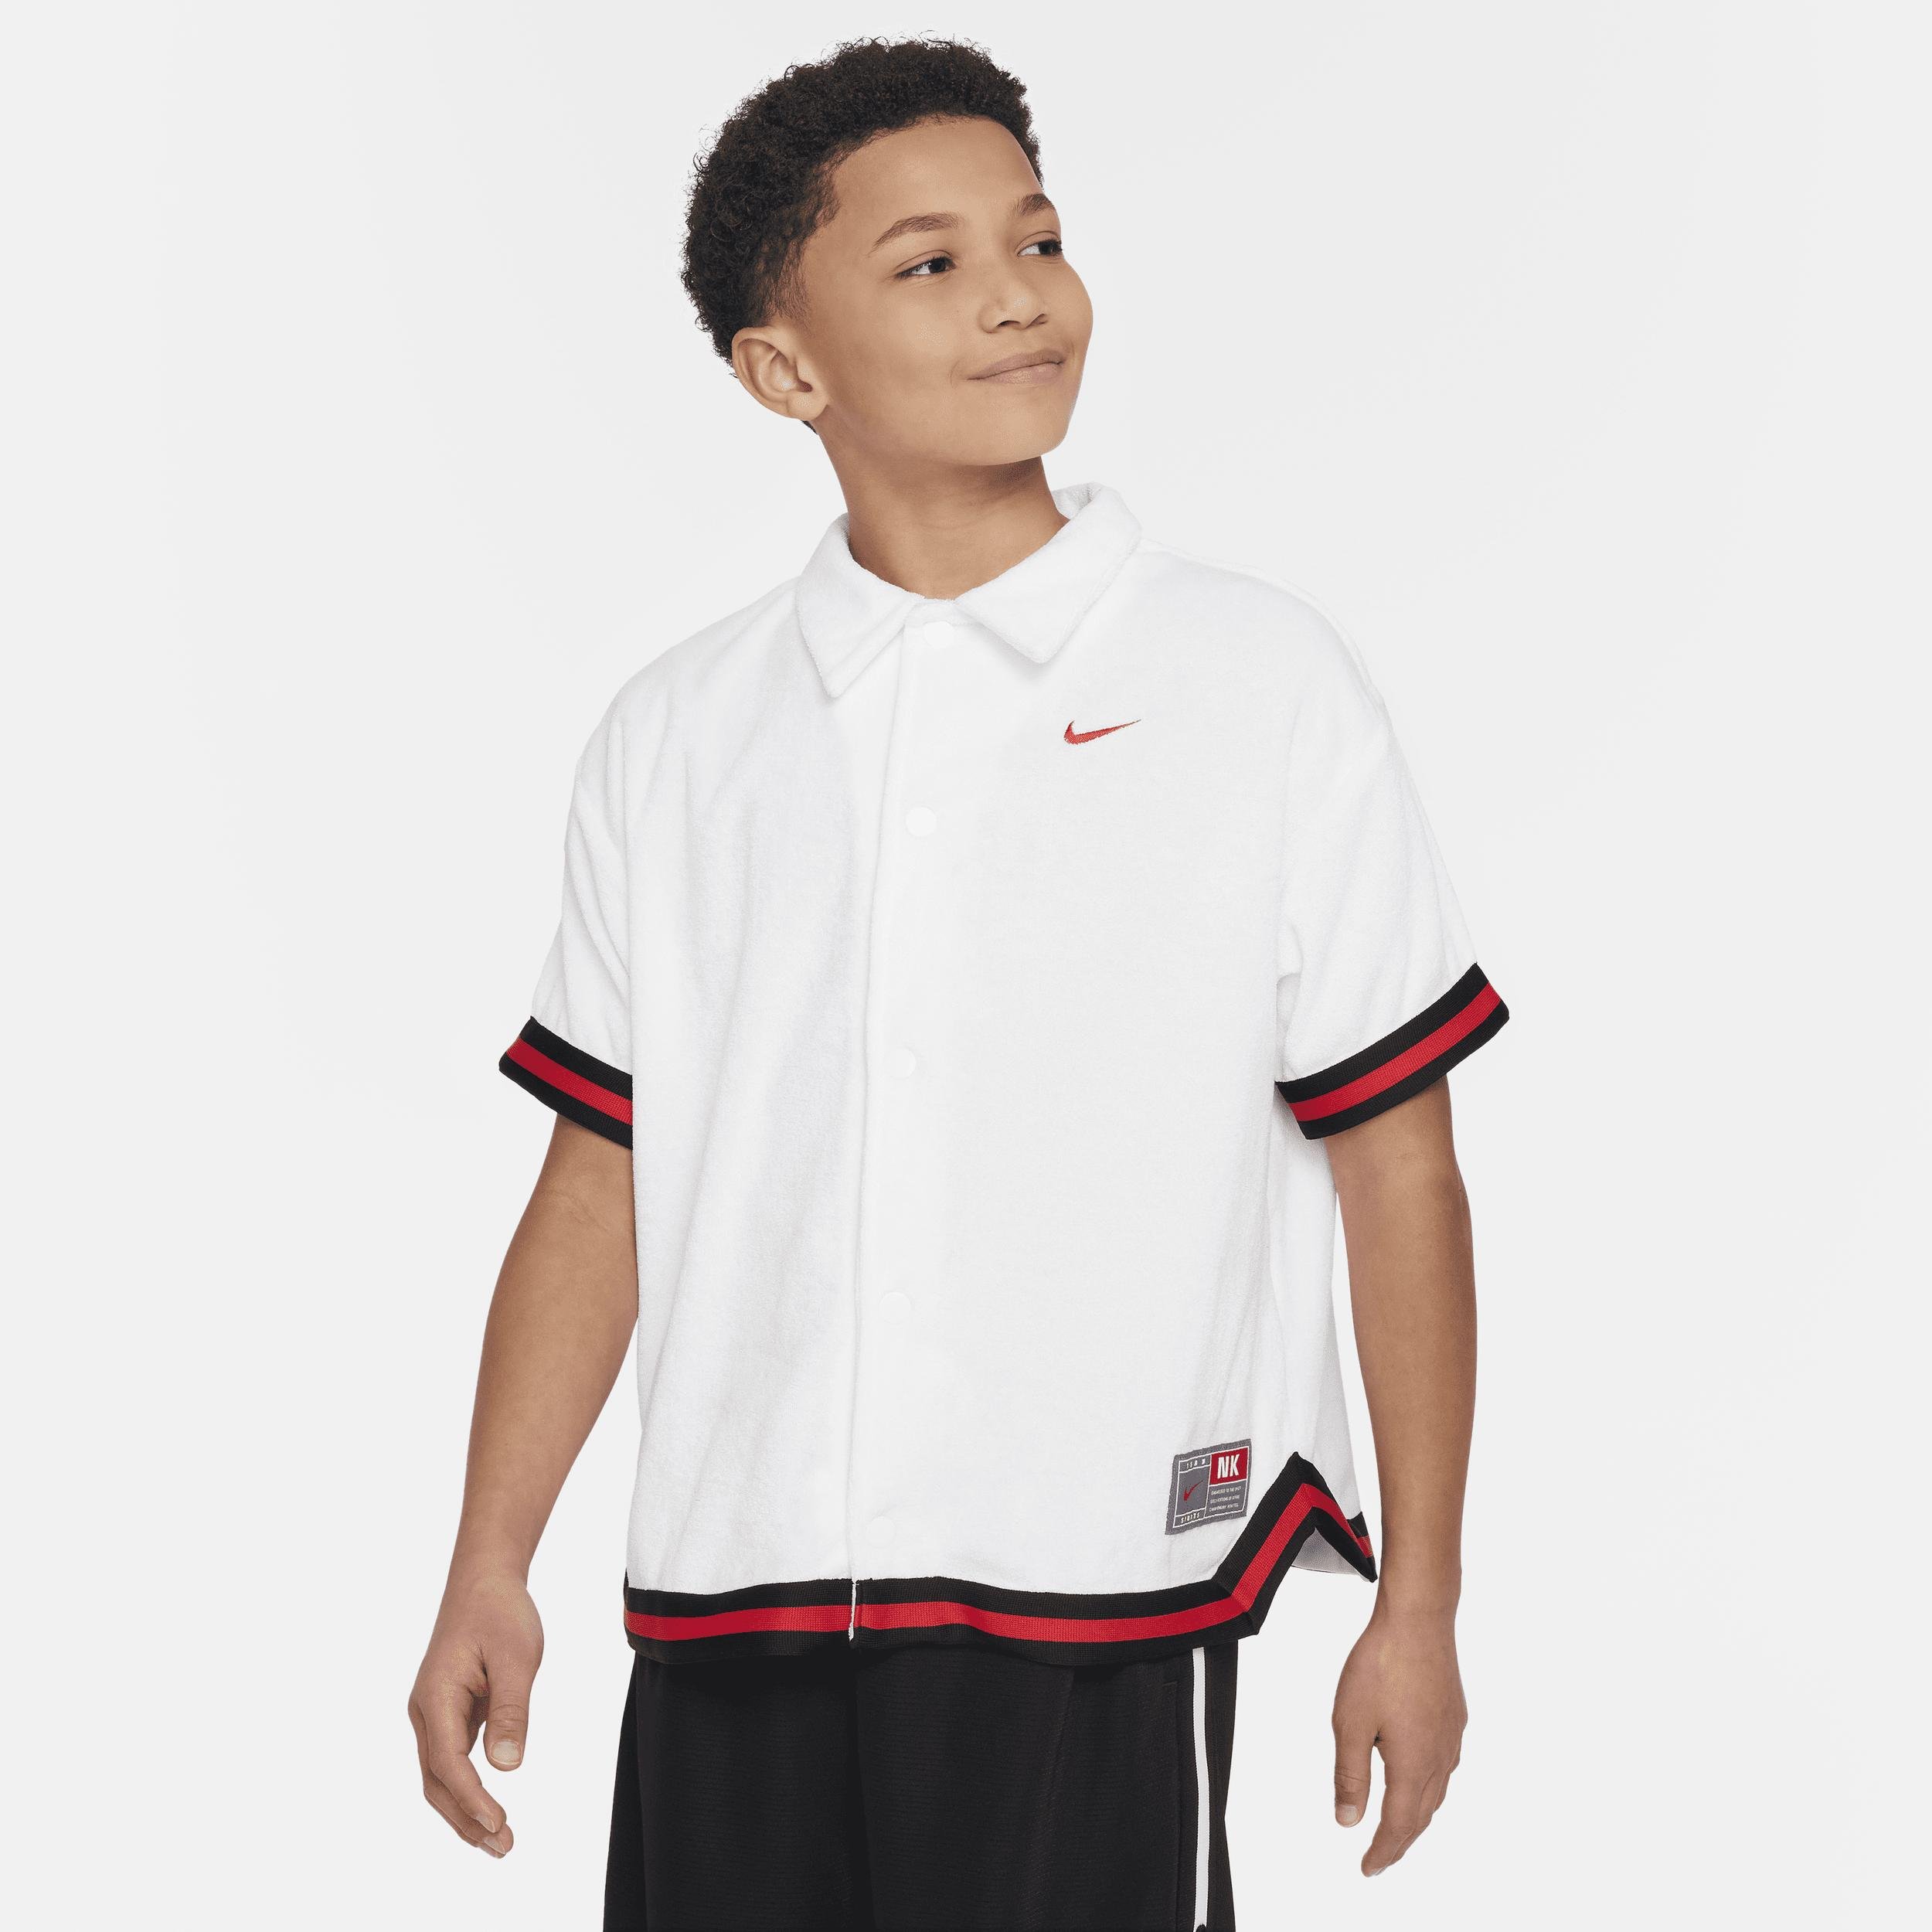 Nike Culture of Basketball Big Kids' Short-Sleeve Top by NIKE